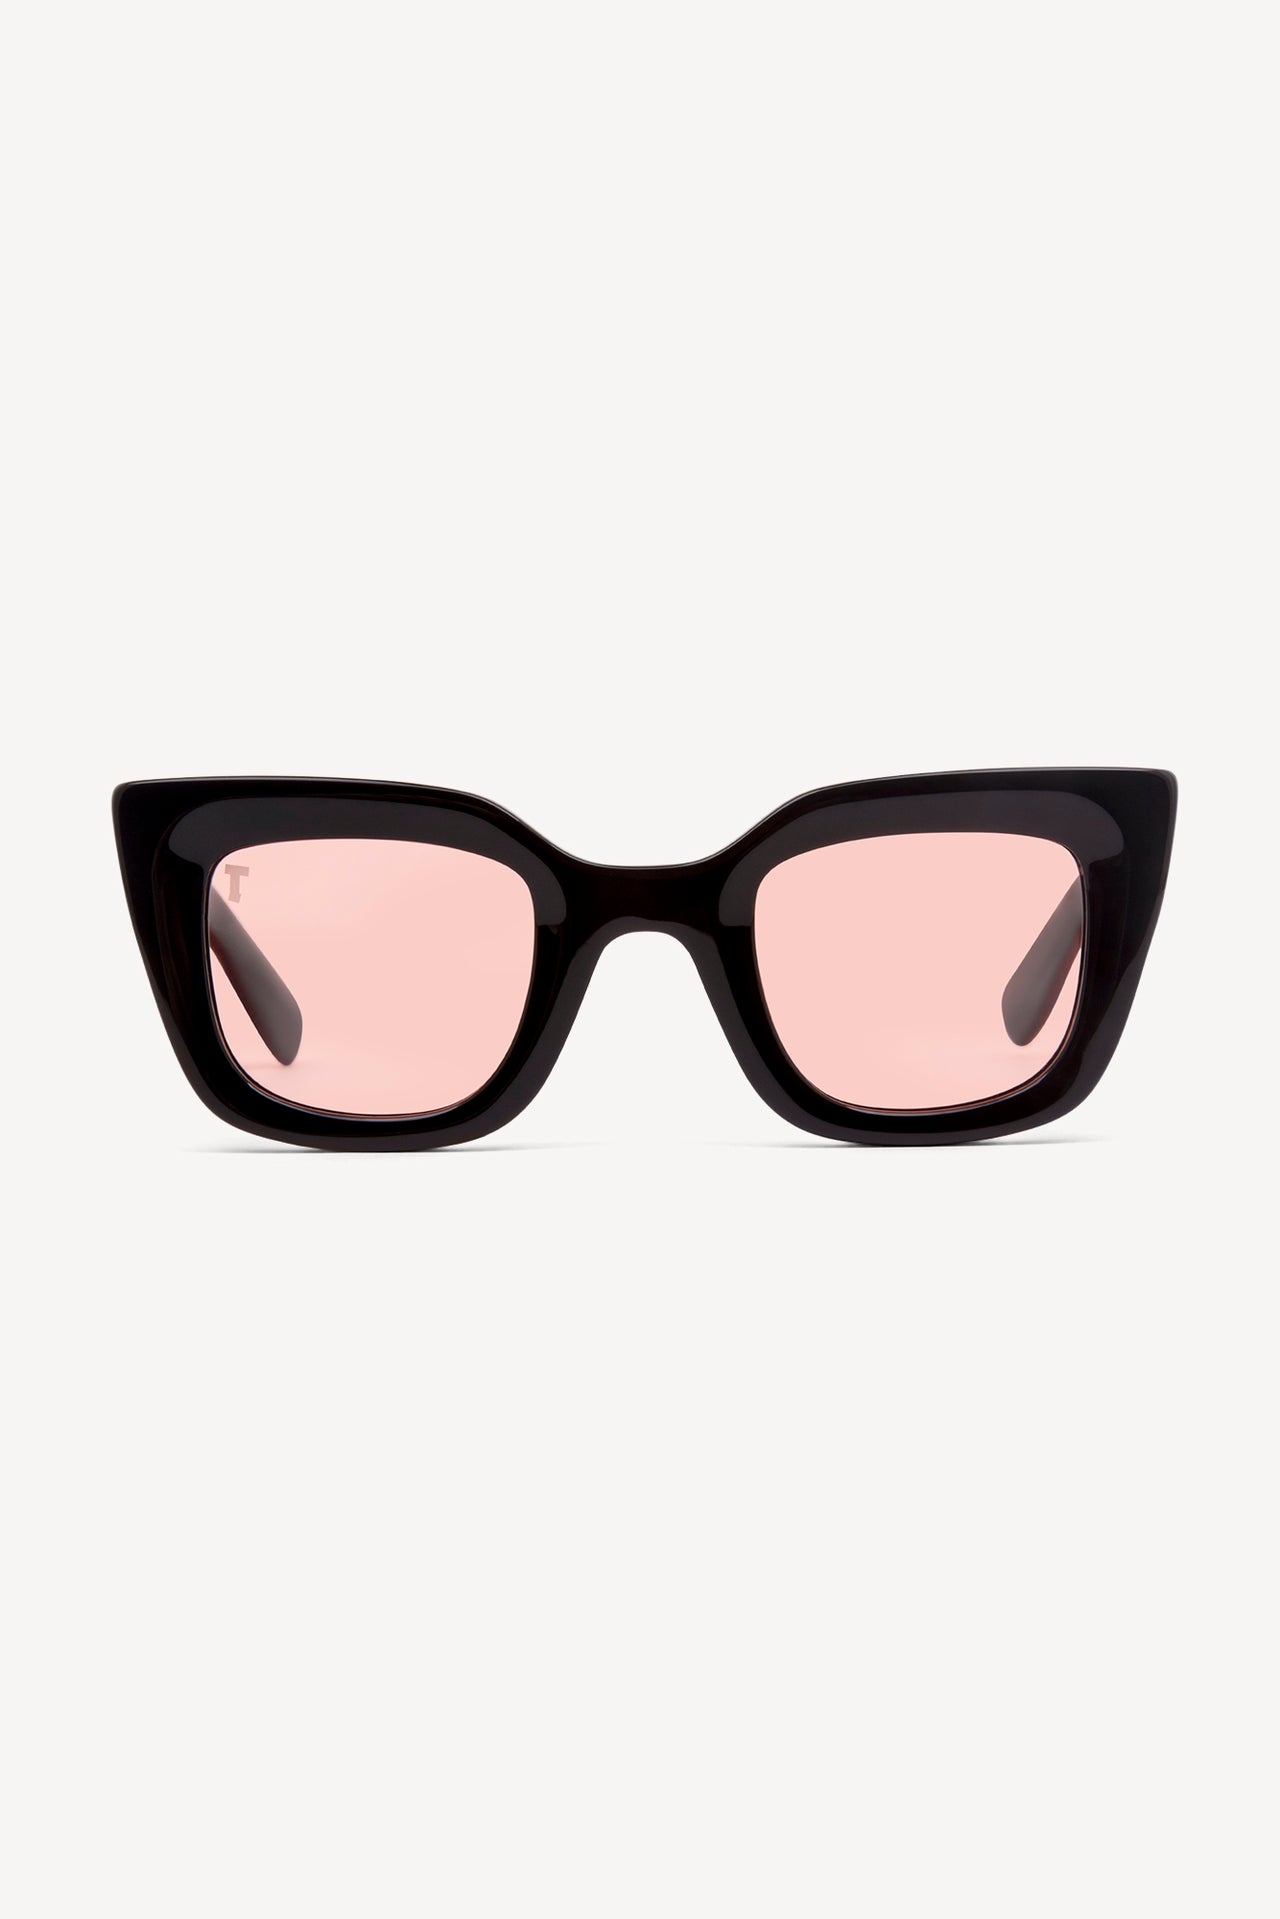 TOATIE Seoul Cat Eye Sunglasses BLACK/PINK